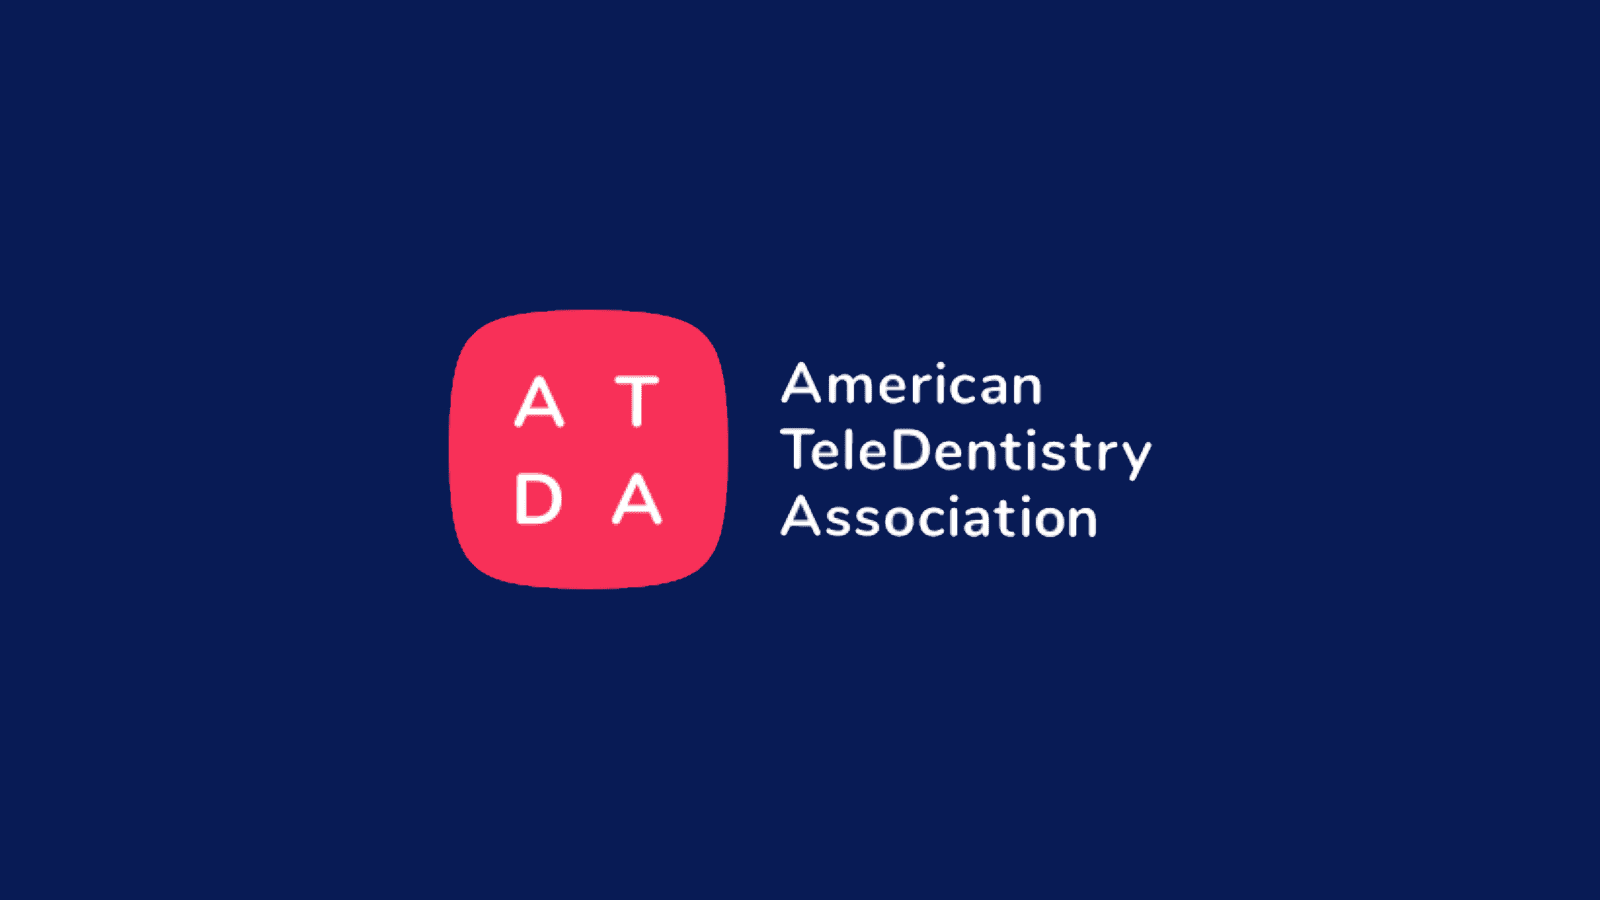 American teledentistry association